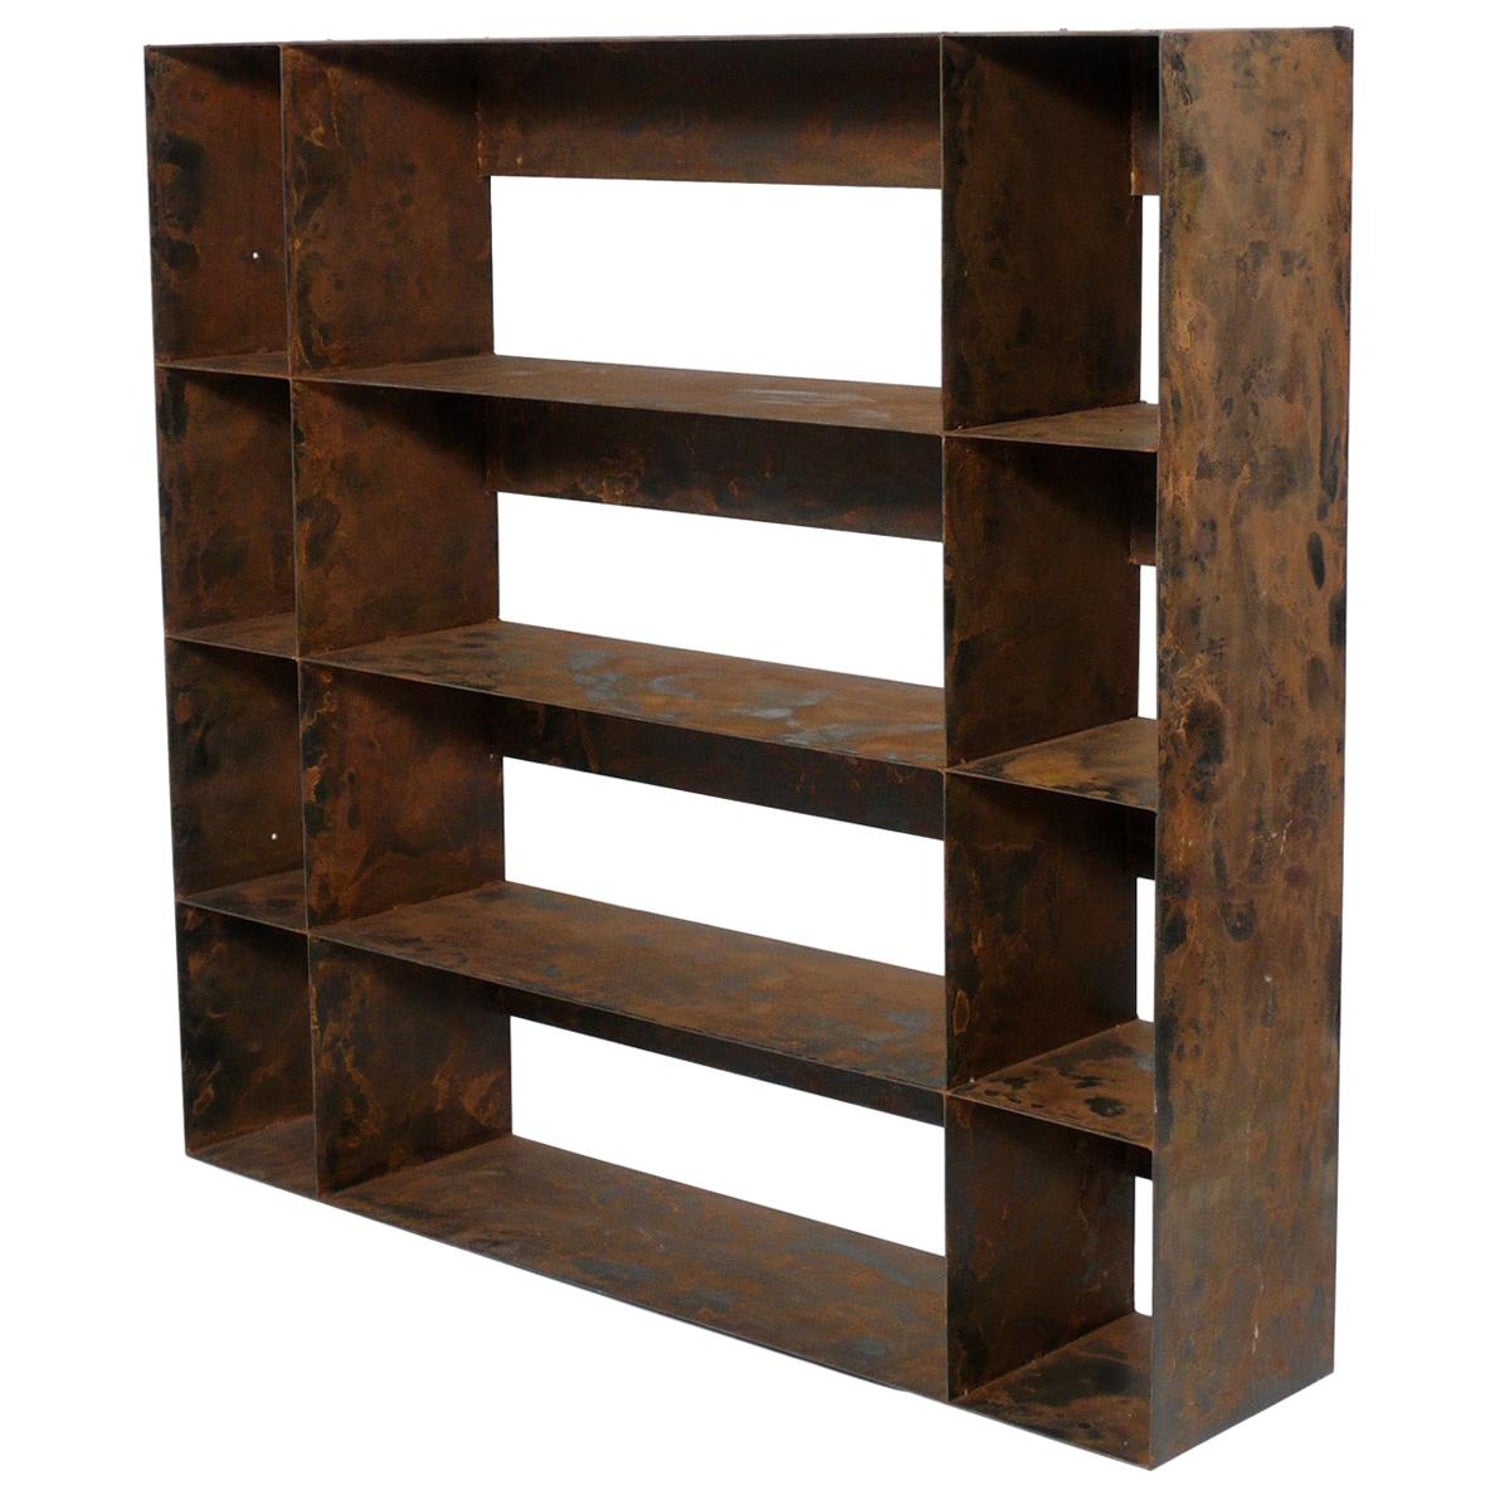 Donald Judd Inspired Metal Bookcase For, Donald Judd Shelves